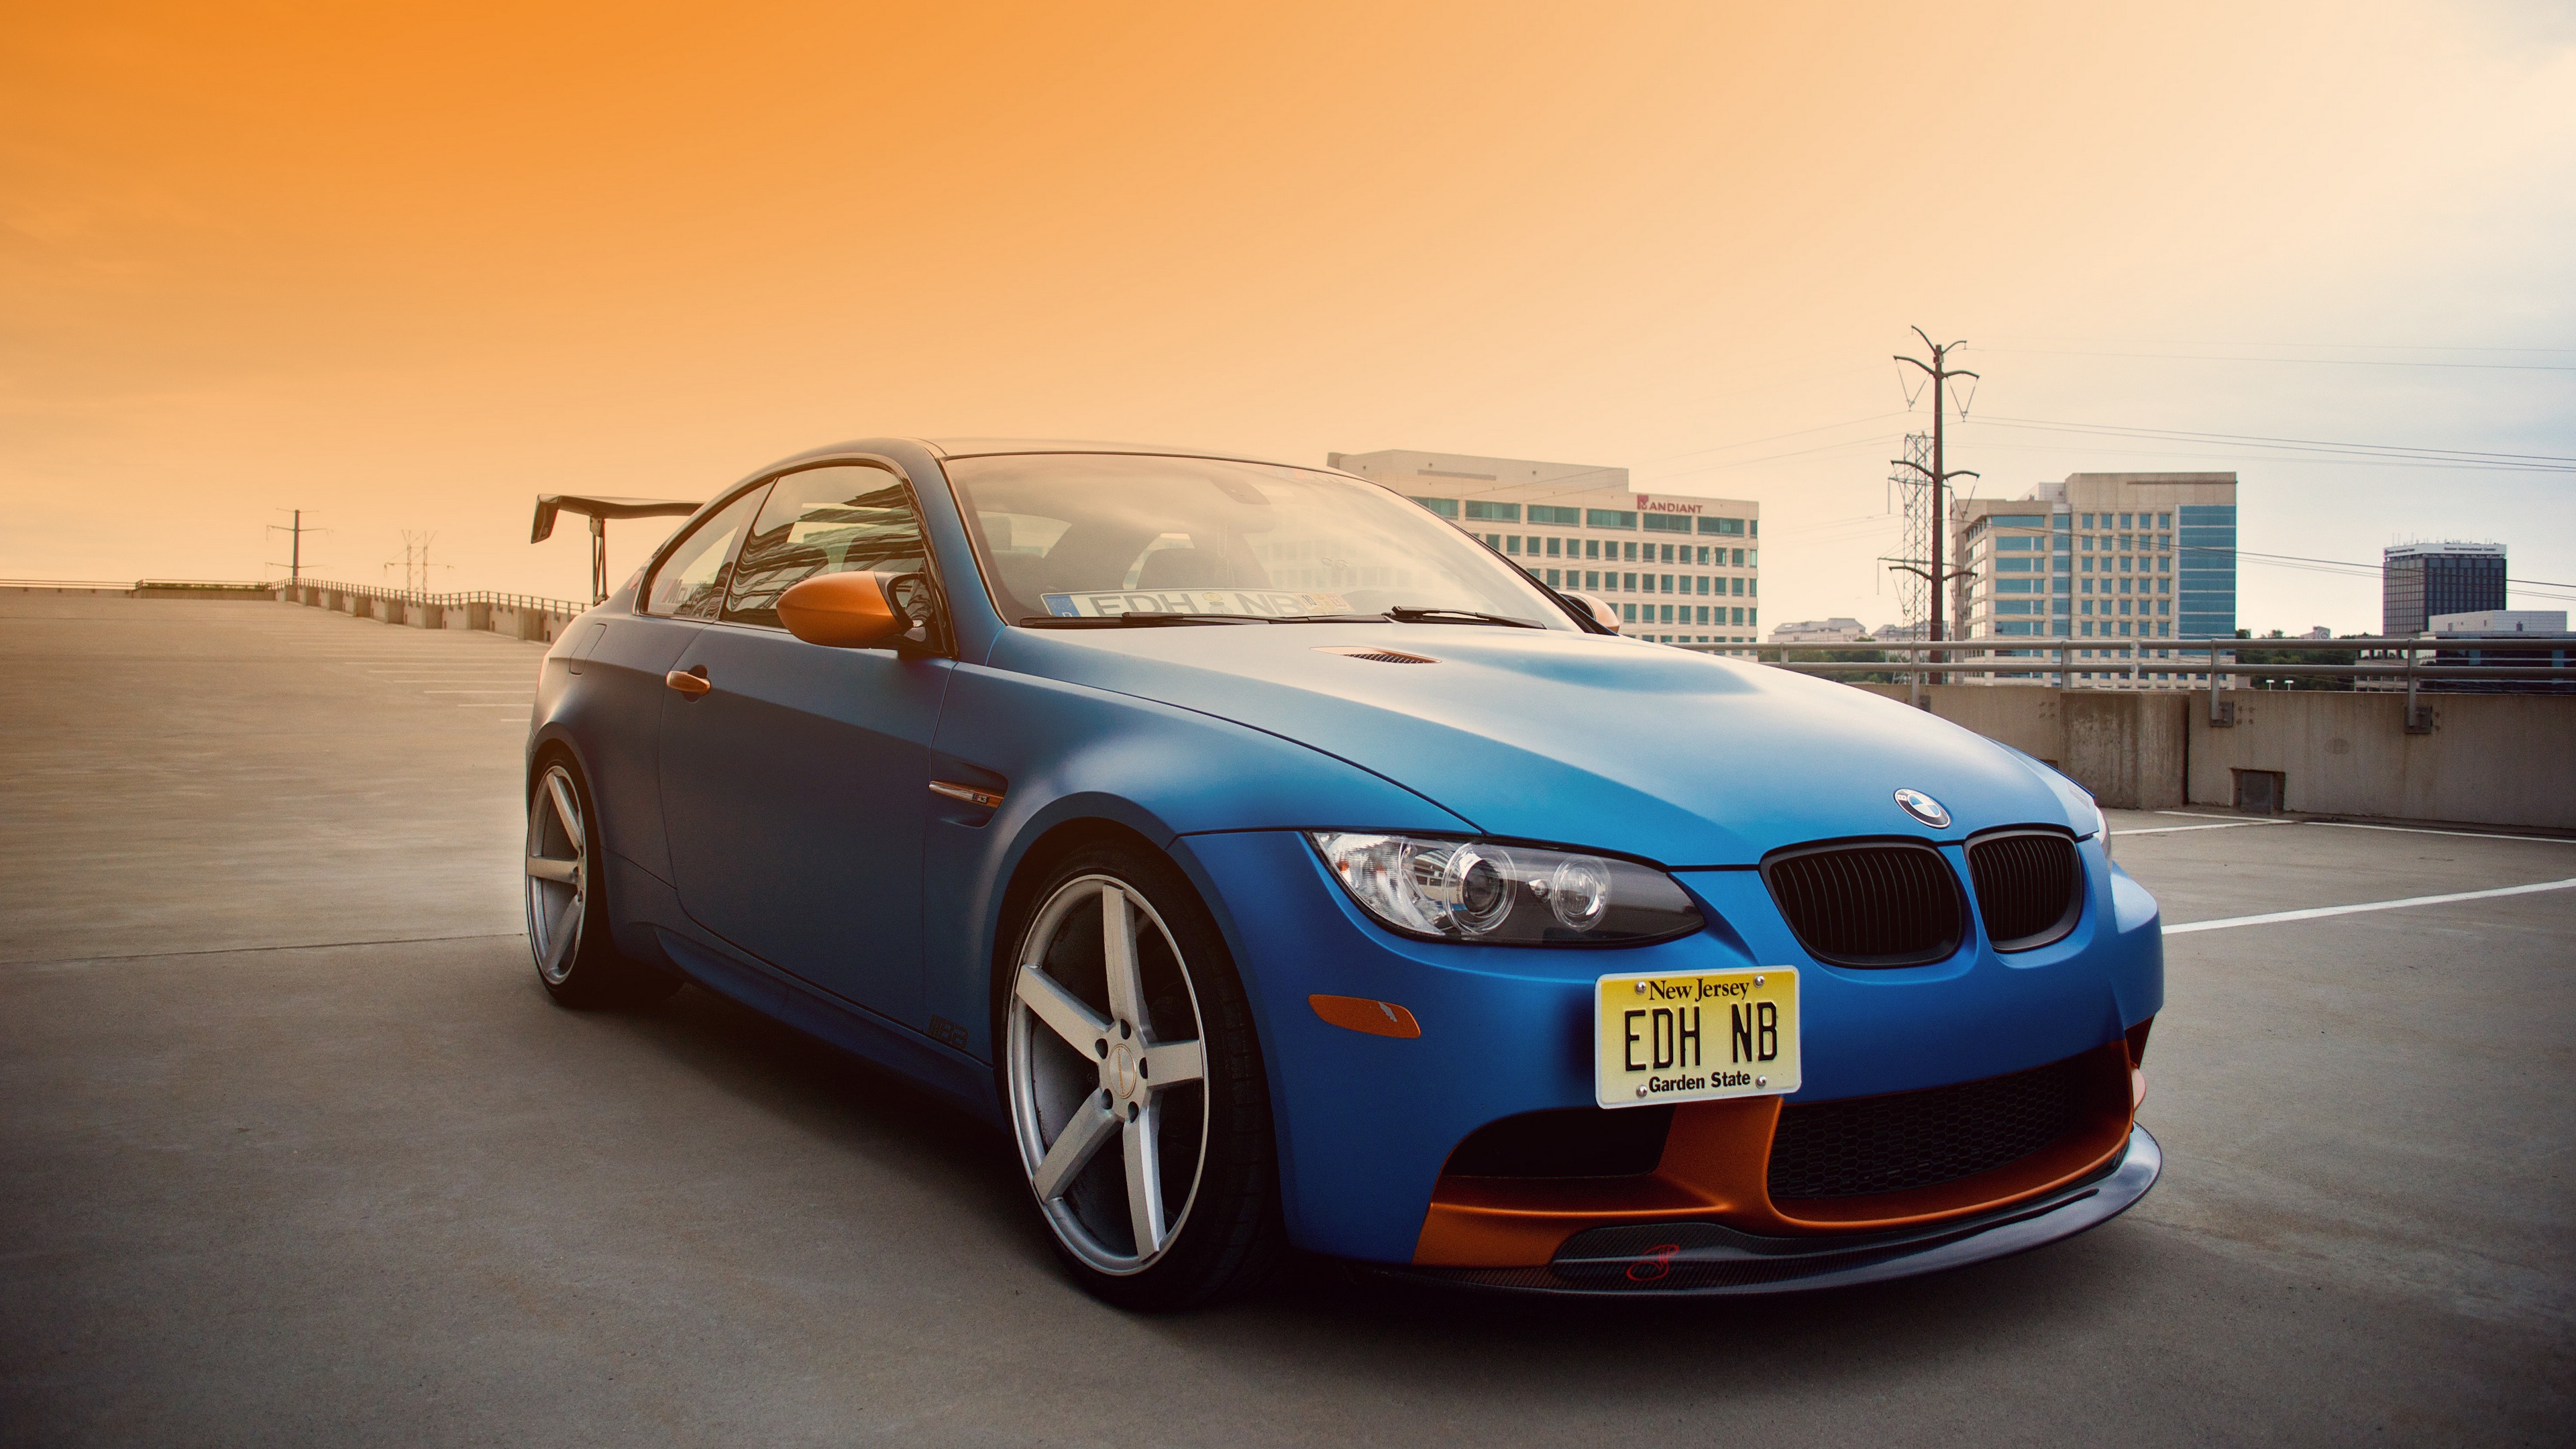 General 3840x2160 BMW blue cars BMW E92 car BMW 3 Series vehicle orange sky